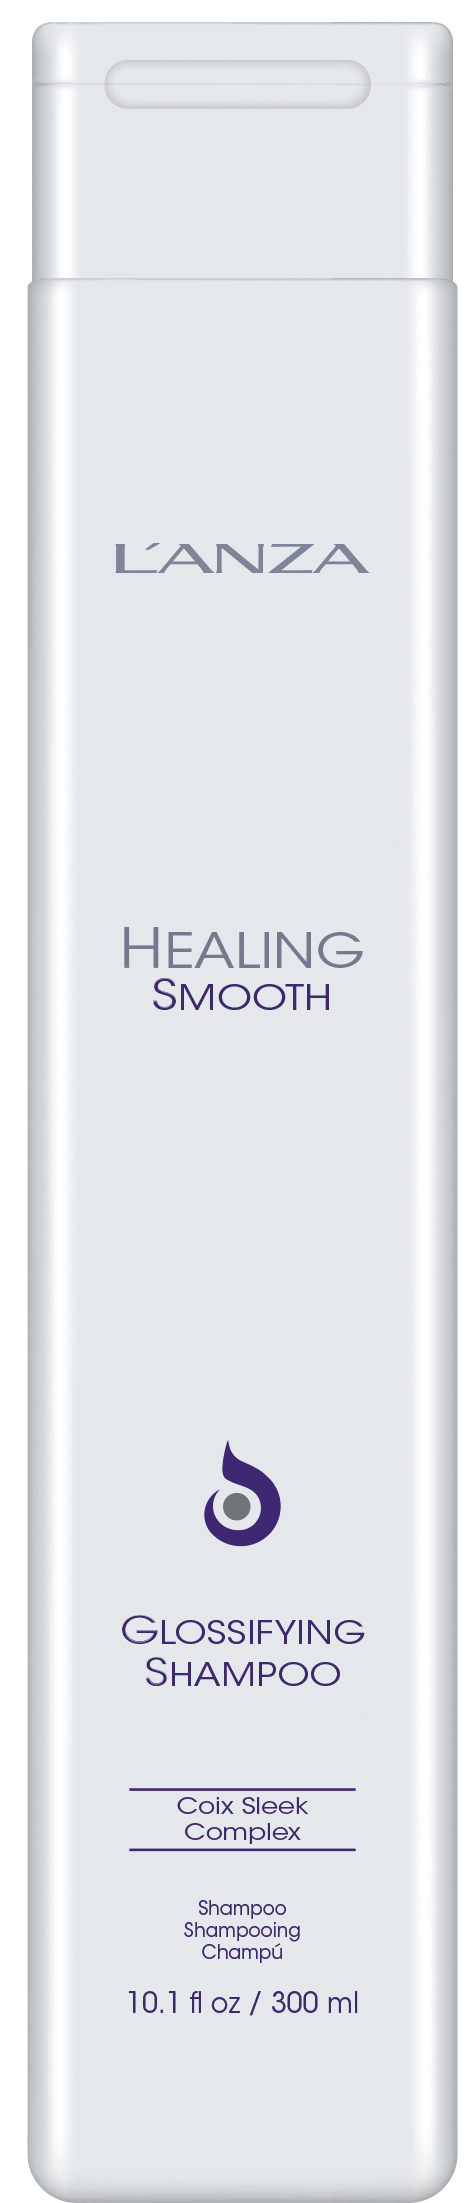 L'ANZA Healing Smooth Shampoo